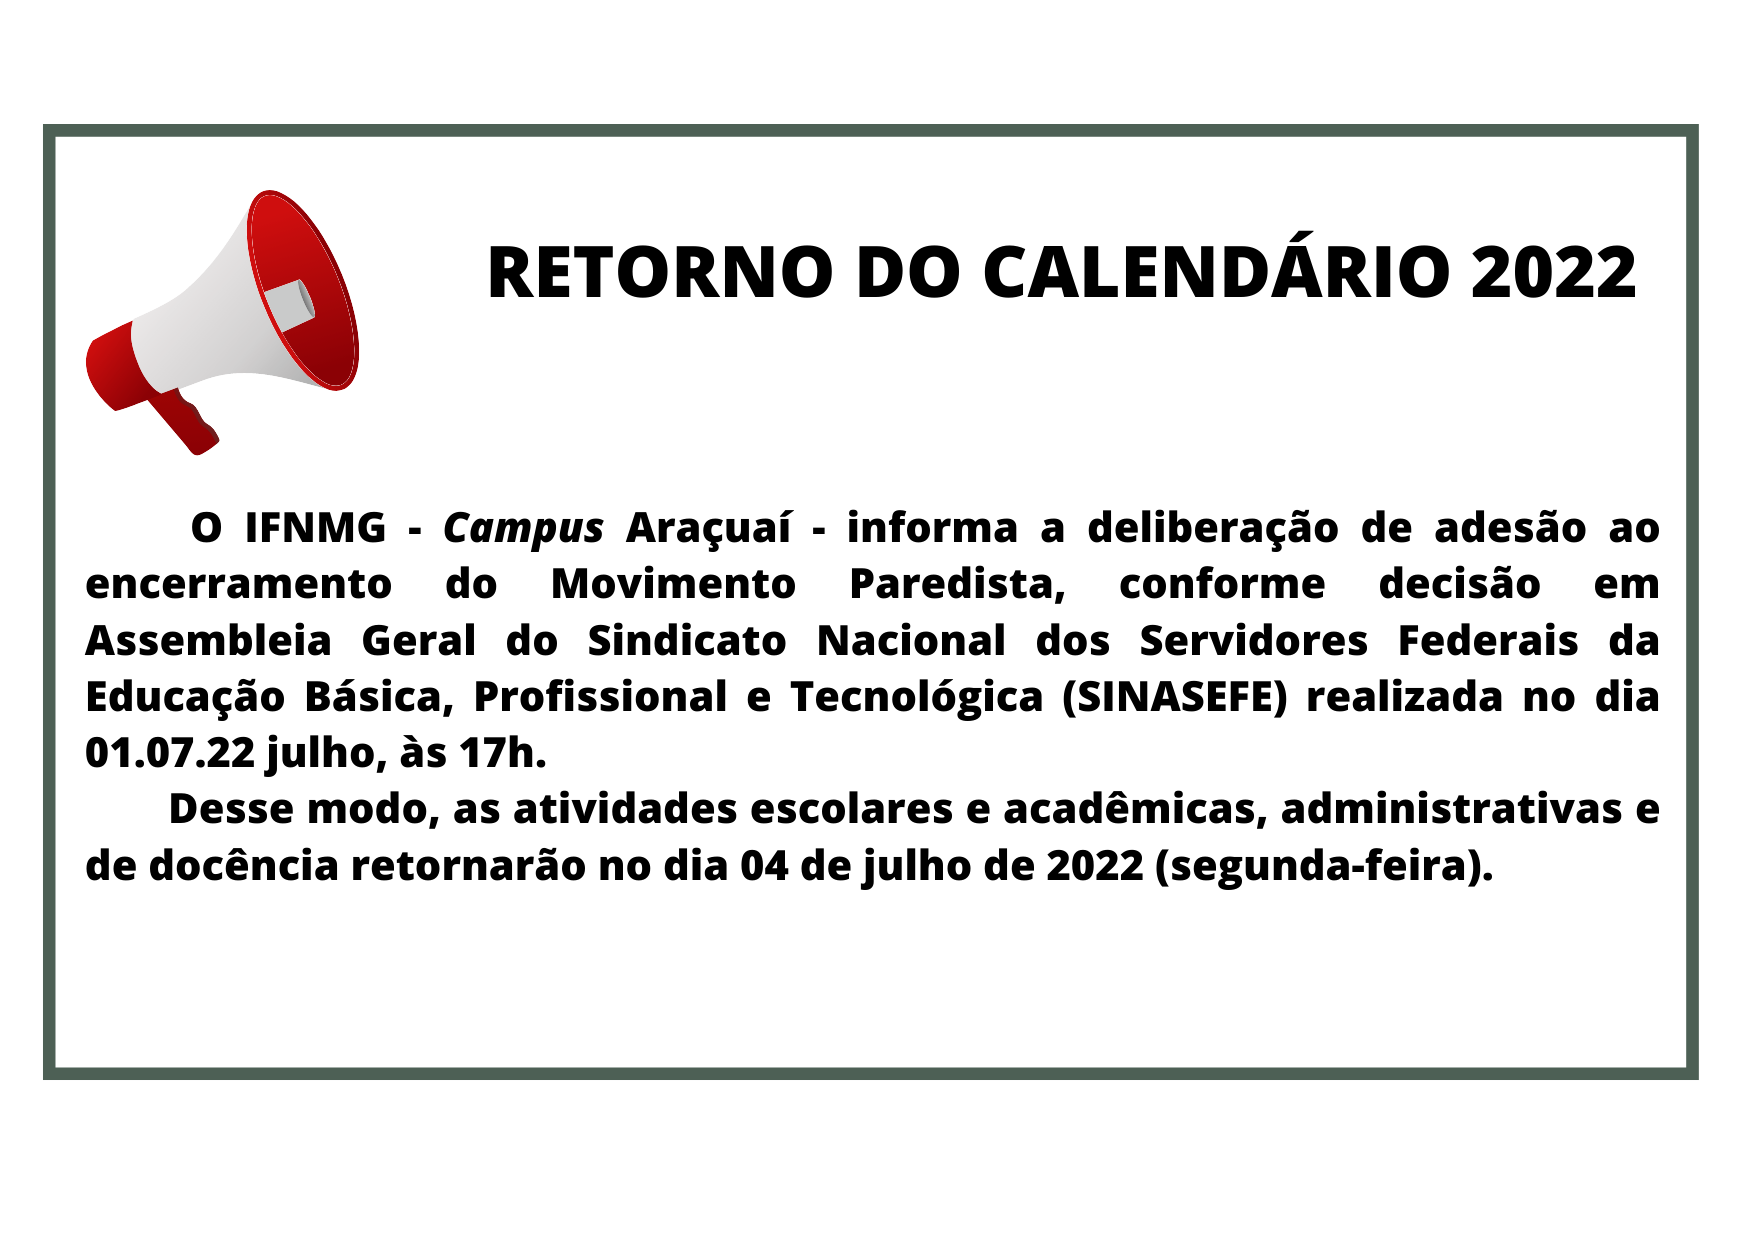 O IFNMG Campus Aracuai informa que recebeu o OFICIO N 2022SINASEFE Secao Norte de MinasSubsecao Aracuai datado de 01 de julho de 2022 que comunica a deliberacao de adesao ao encerramento do Movimento Pa 1